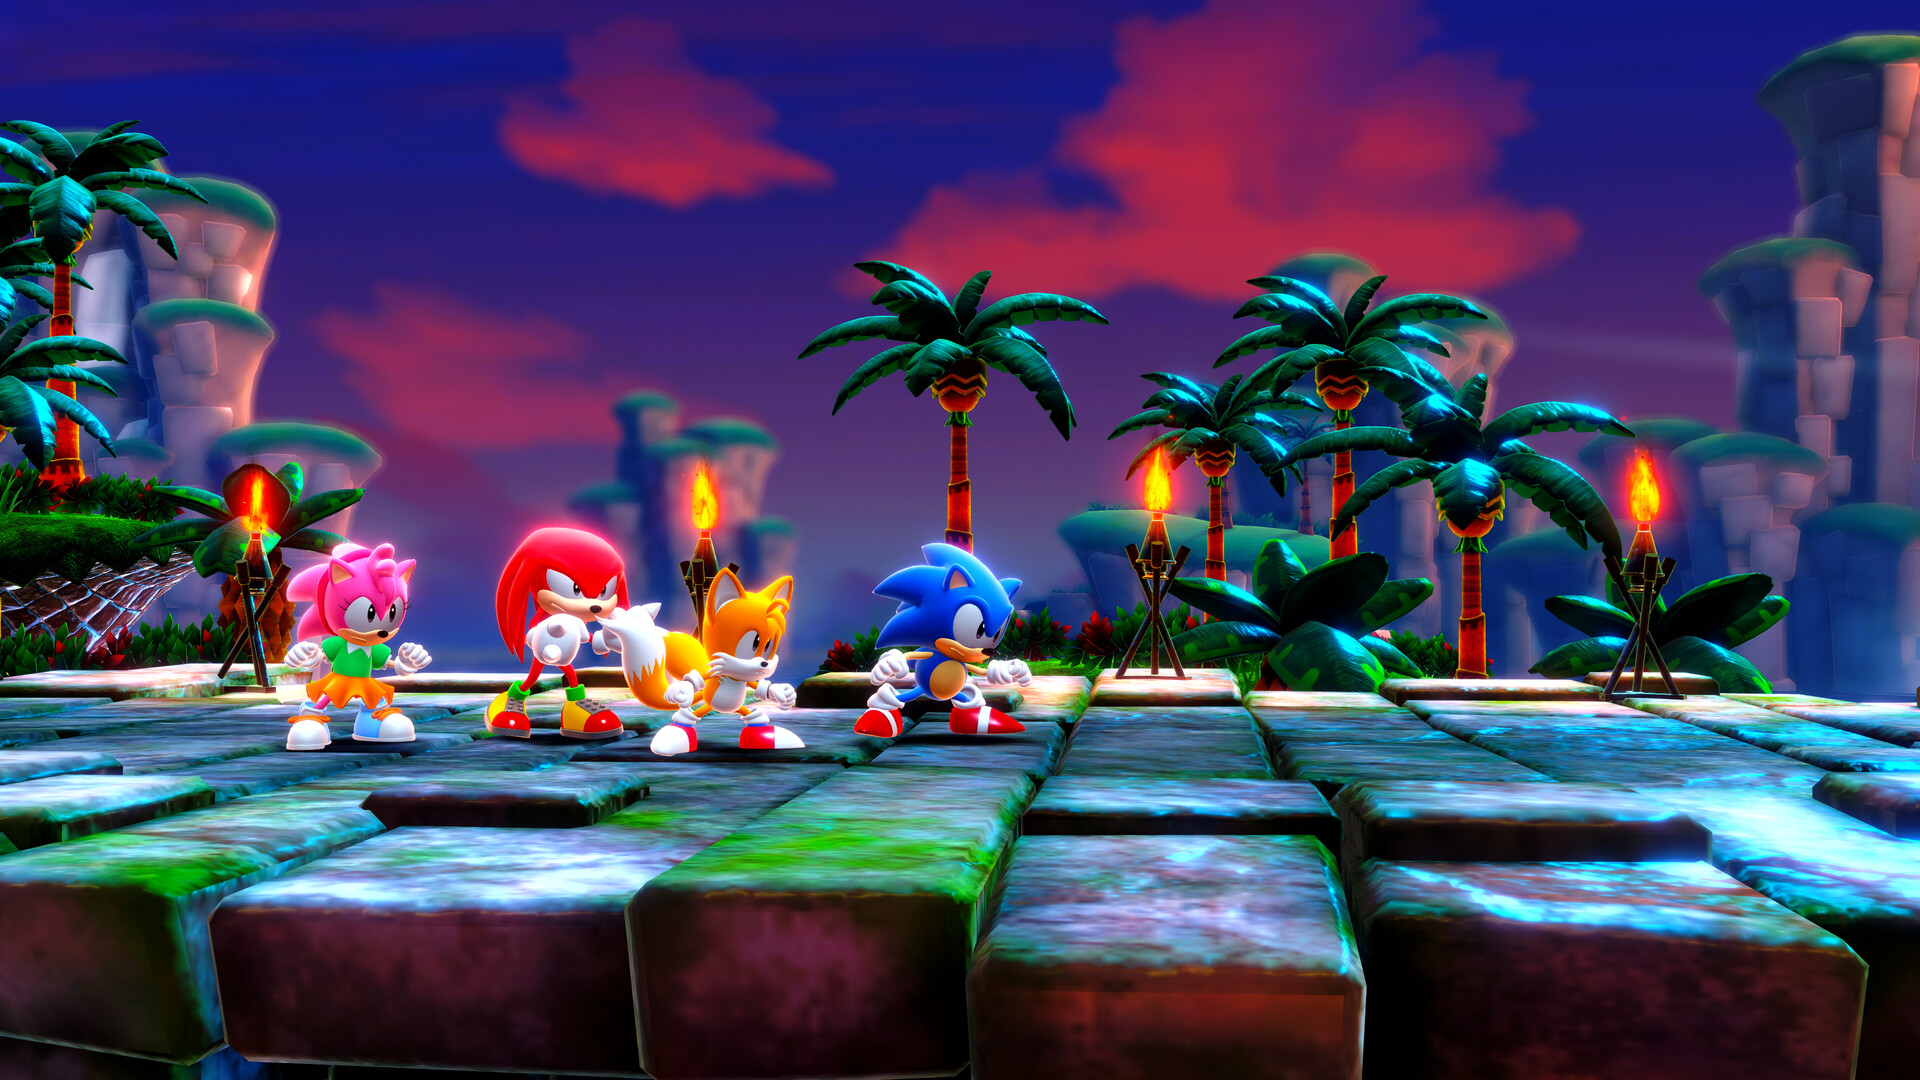 Sonic Superstars Steam Key for PC - Buy now